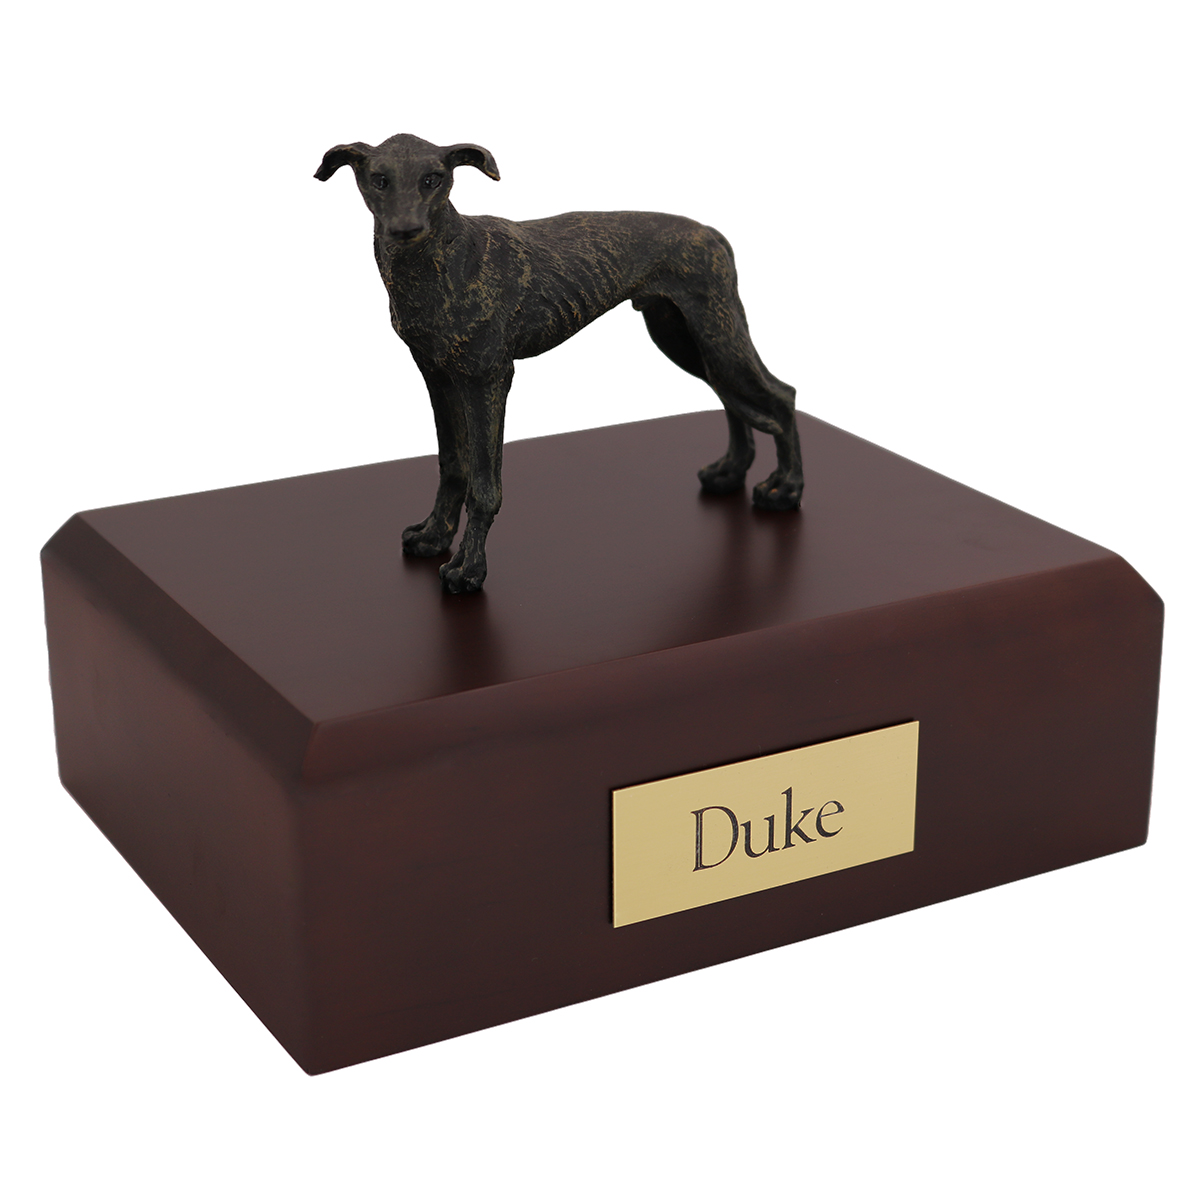 Dog, Greyhound, Brindle - Figurine Urn